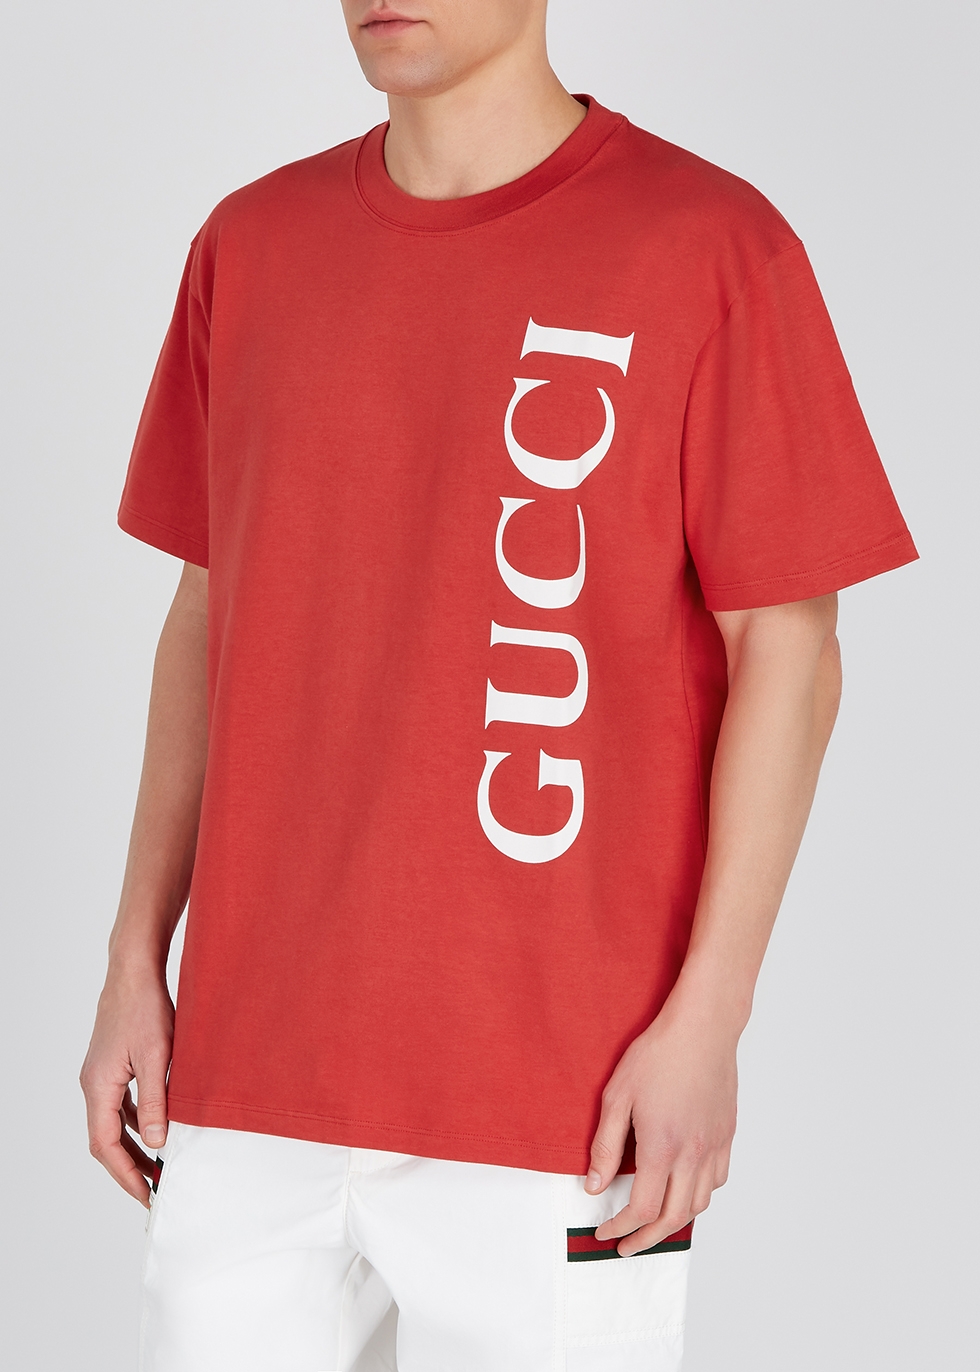 Gucci Red logo cotton T-shirt - Harvey 